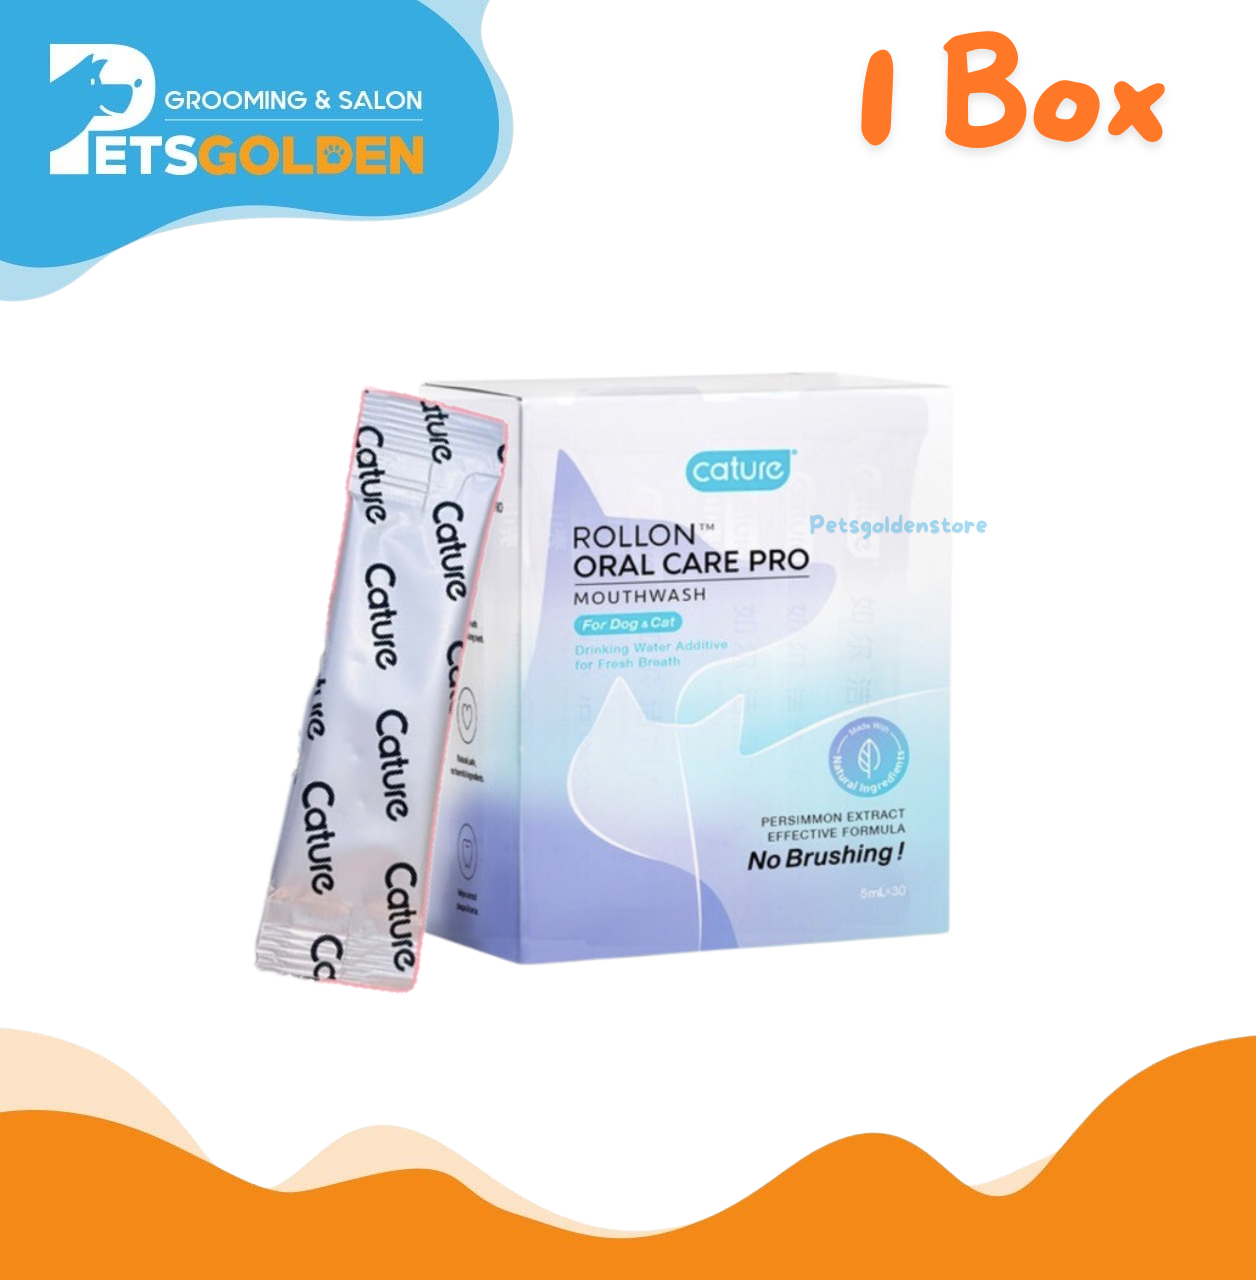 Cature Oral Care Pro Series Mouthwash 1 Box